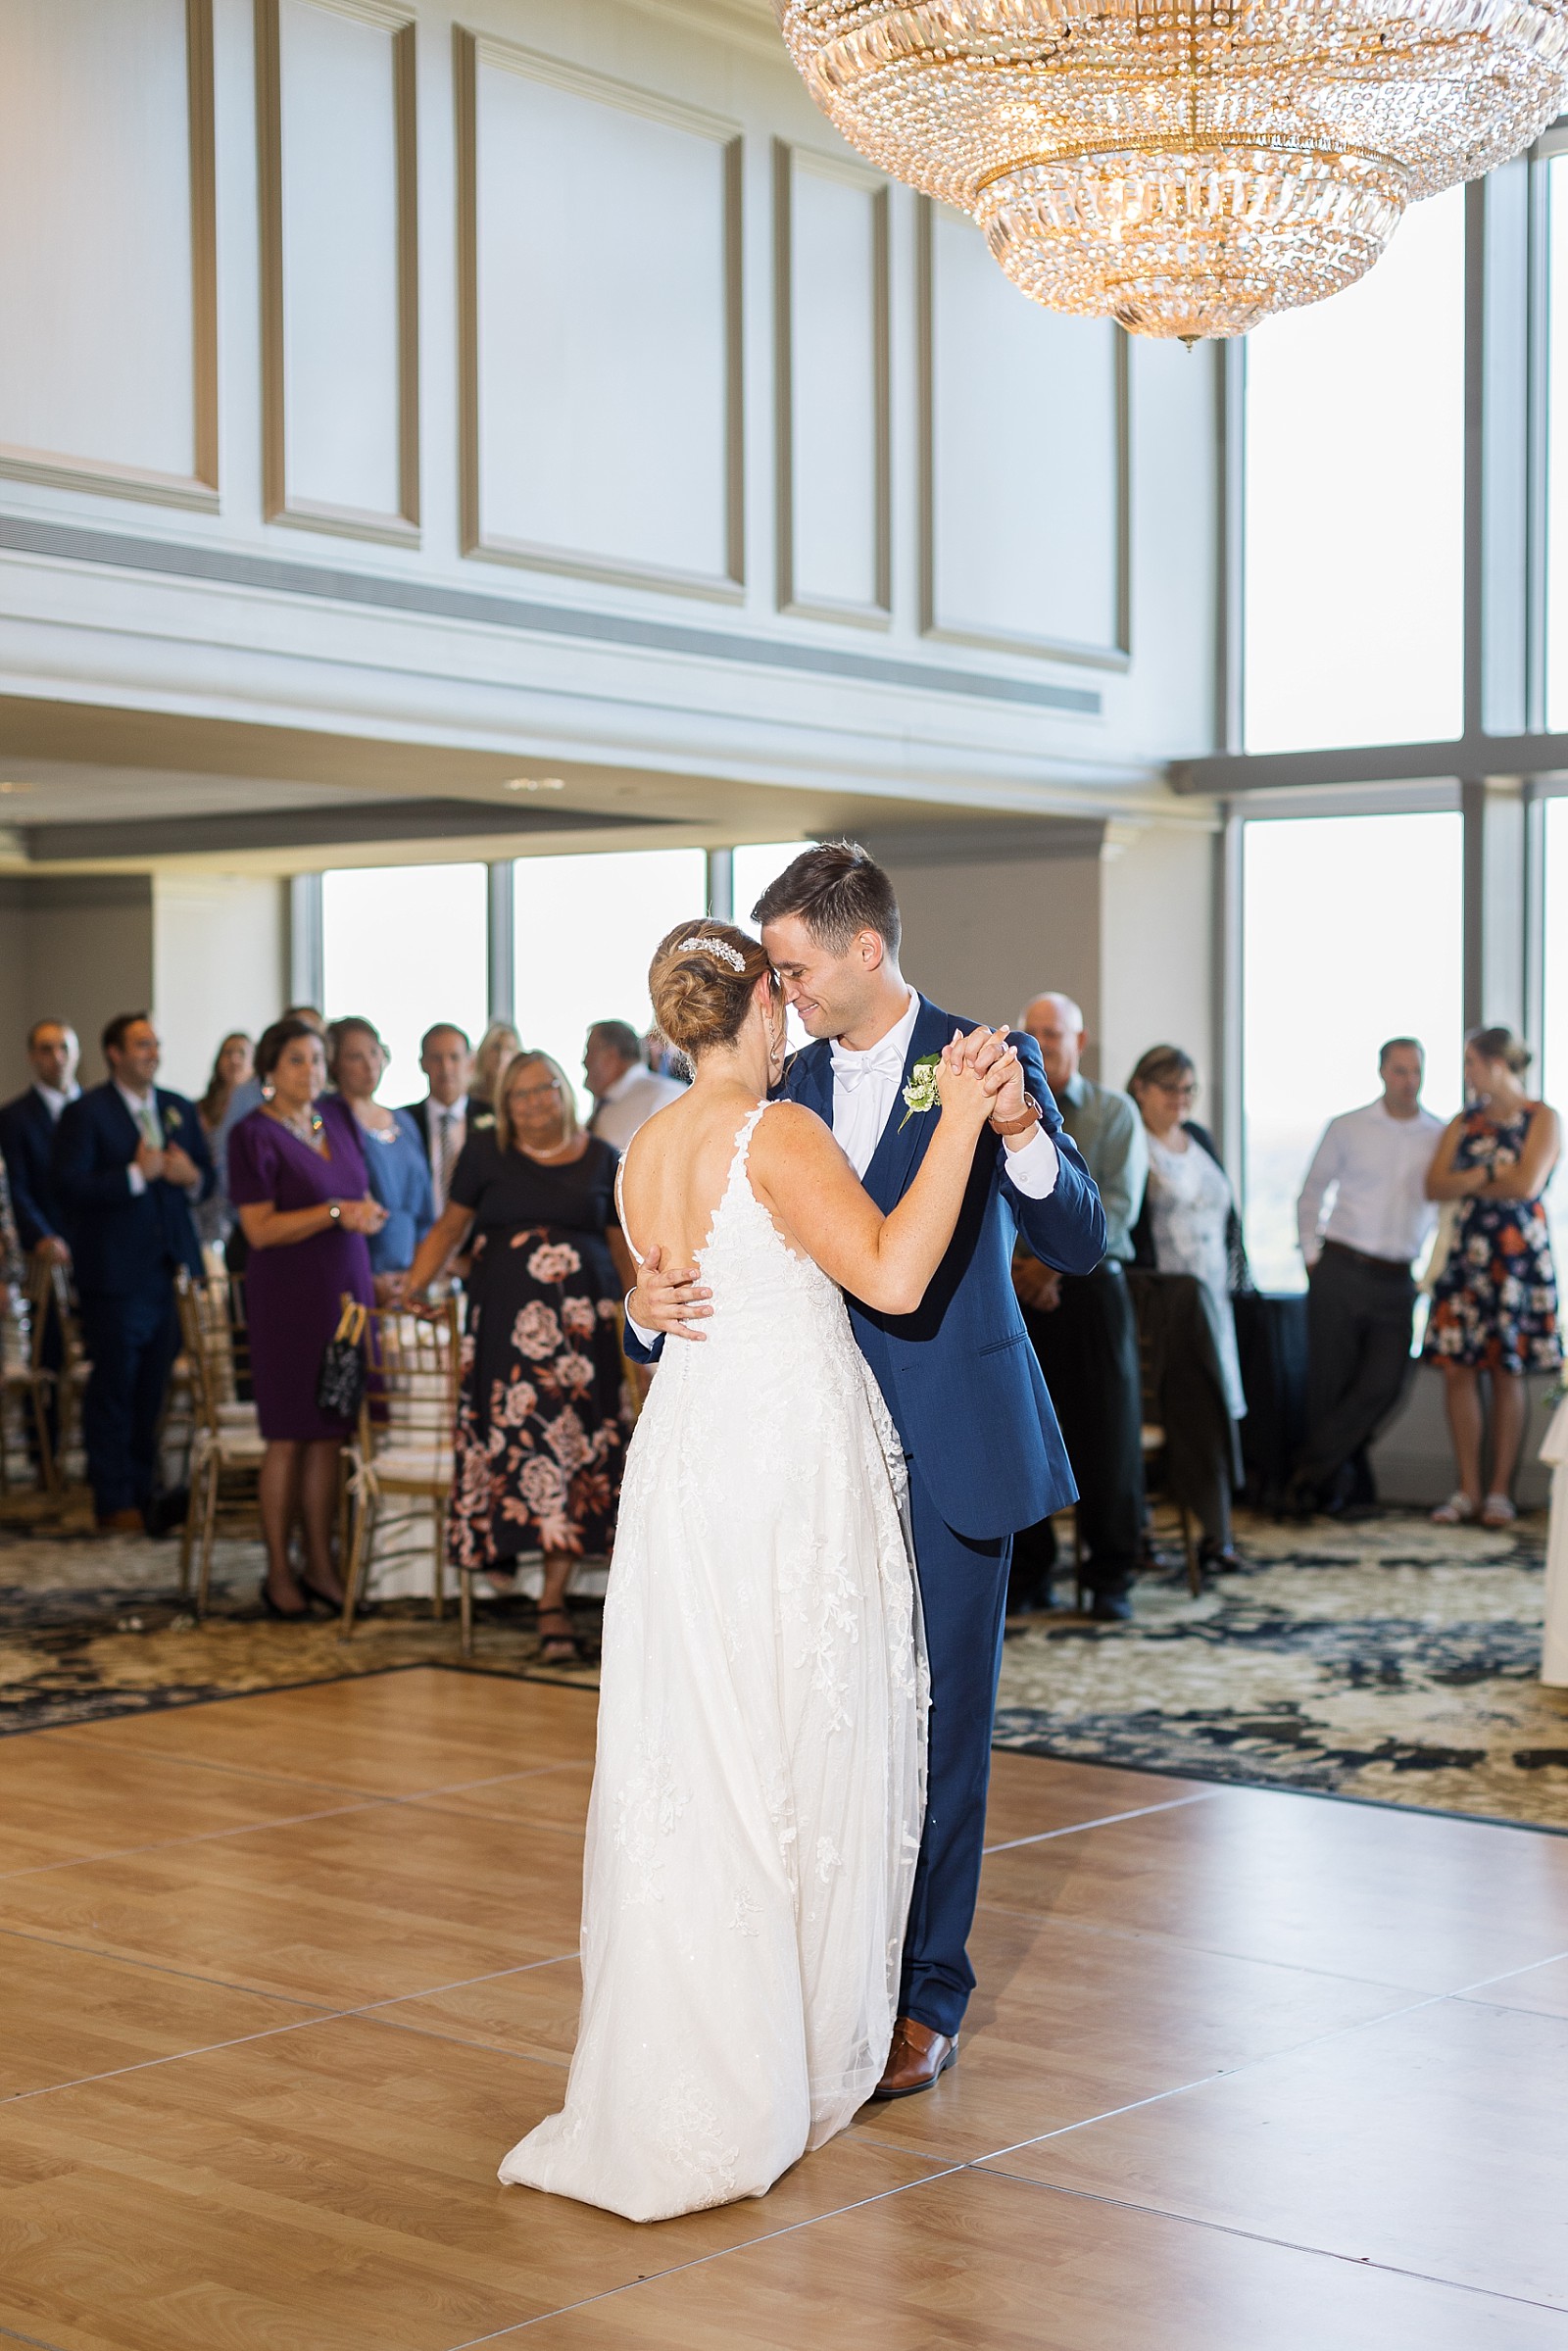 First dance under chandelier | Raleigh Wedding Photographer Sarah Hinckley